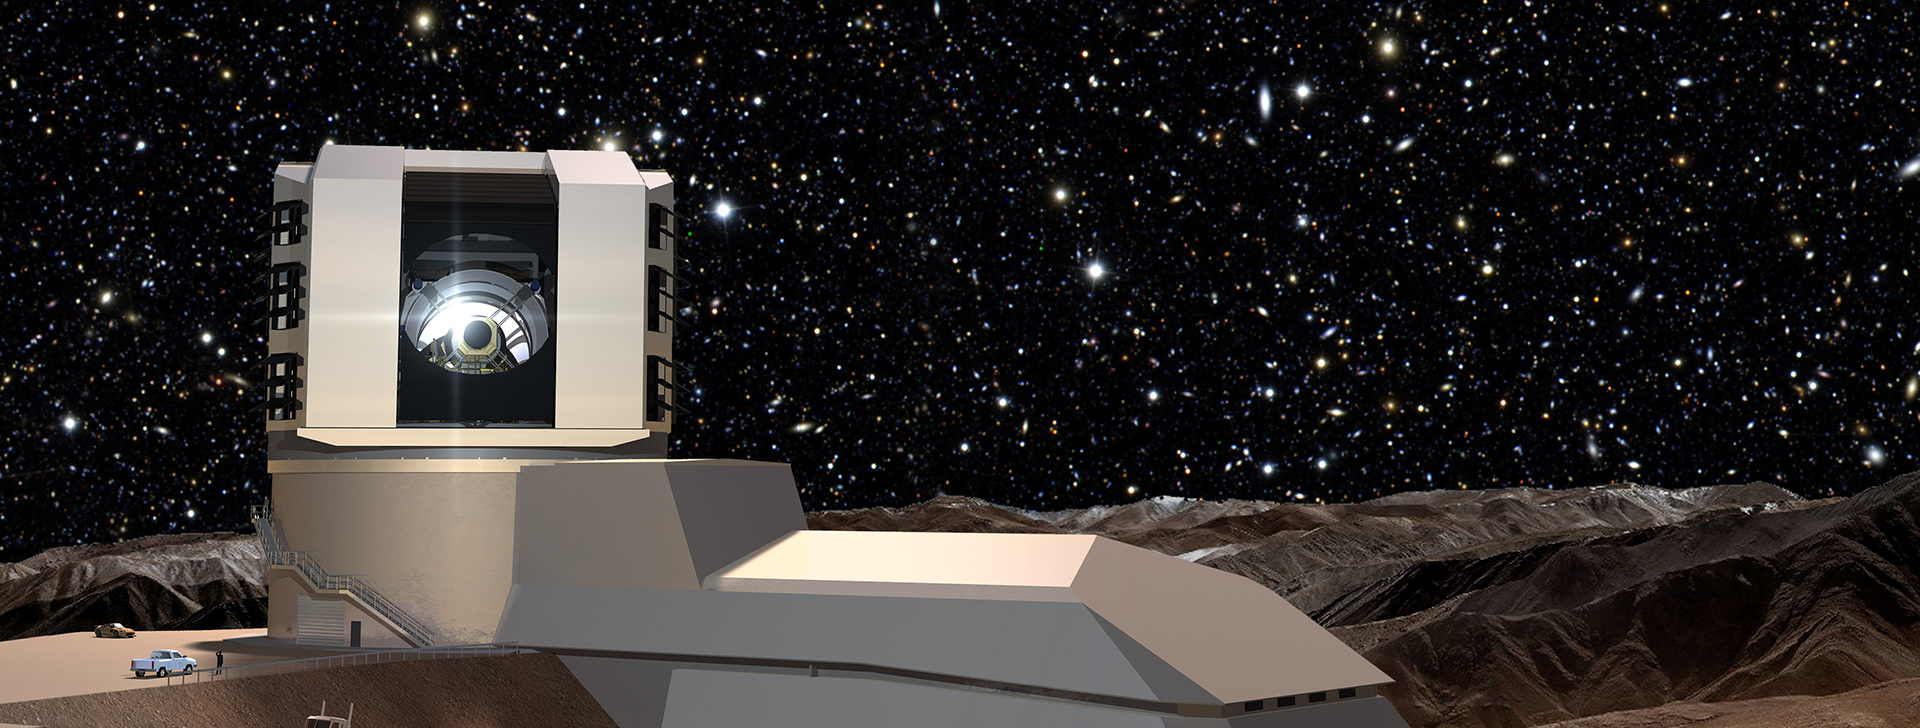 The Large Synoptic Survey Telescope (artist's impression).